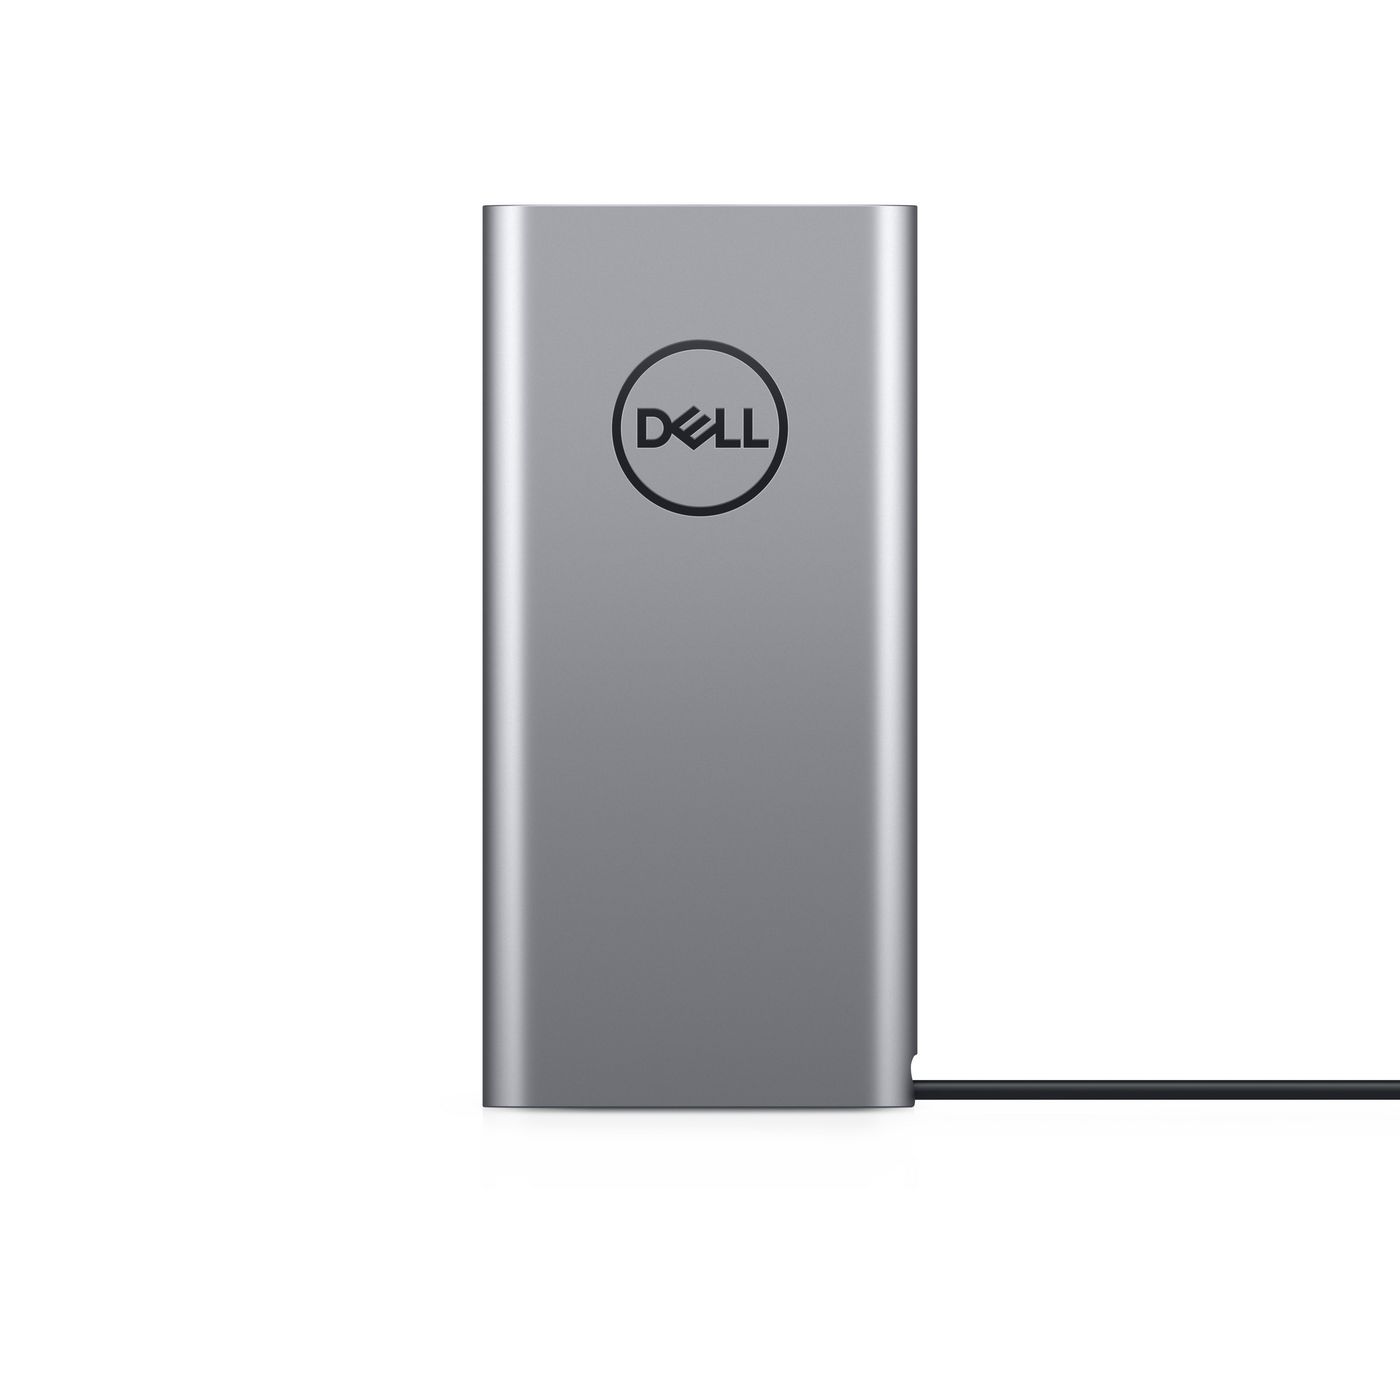 DELL Power Bank Plus USB-C (65W)